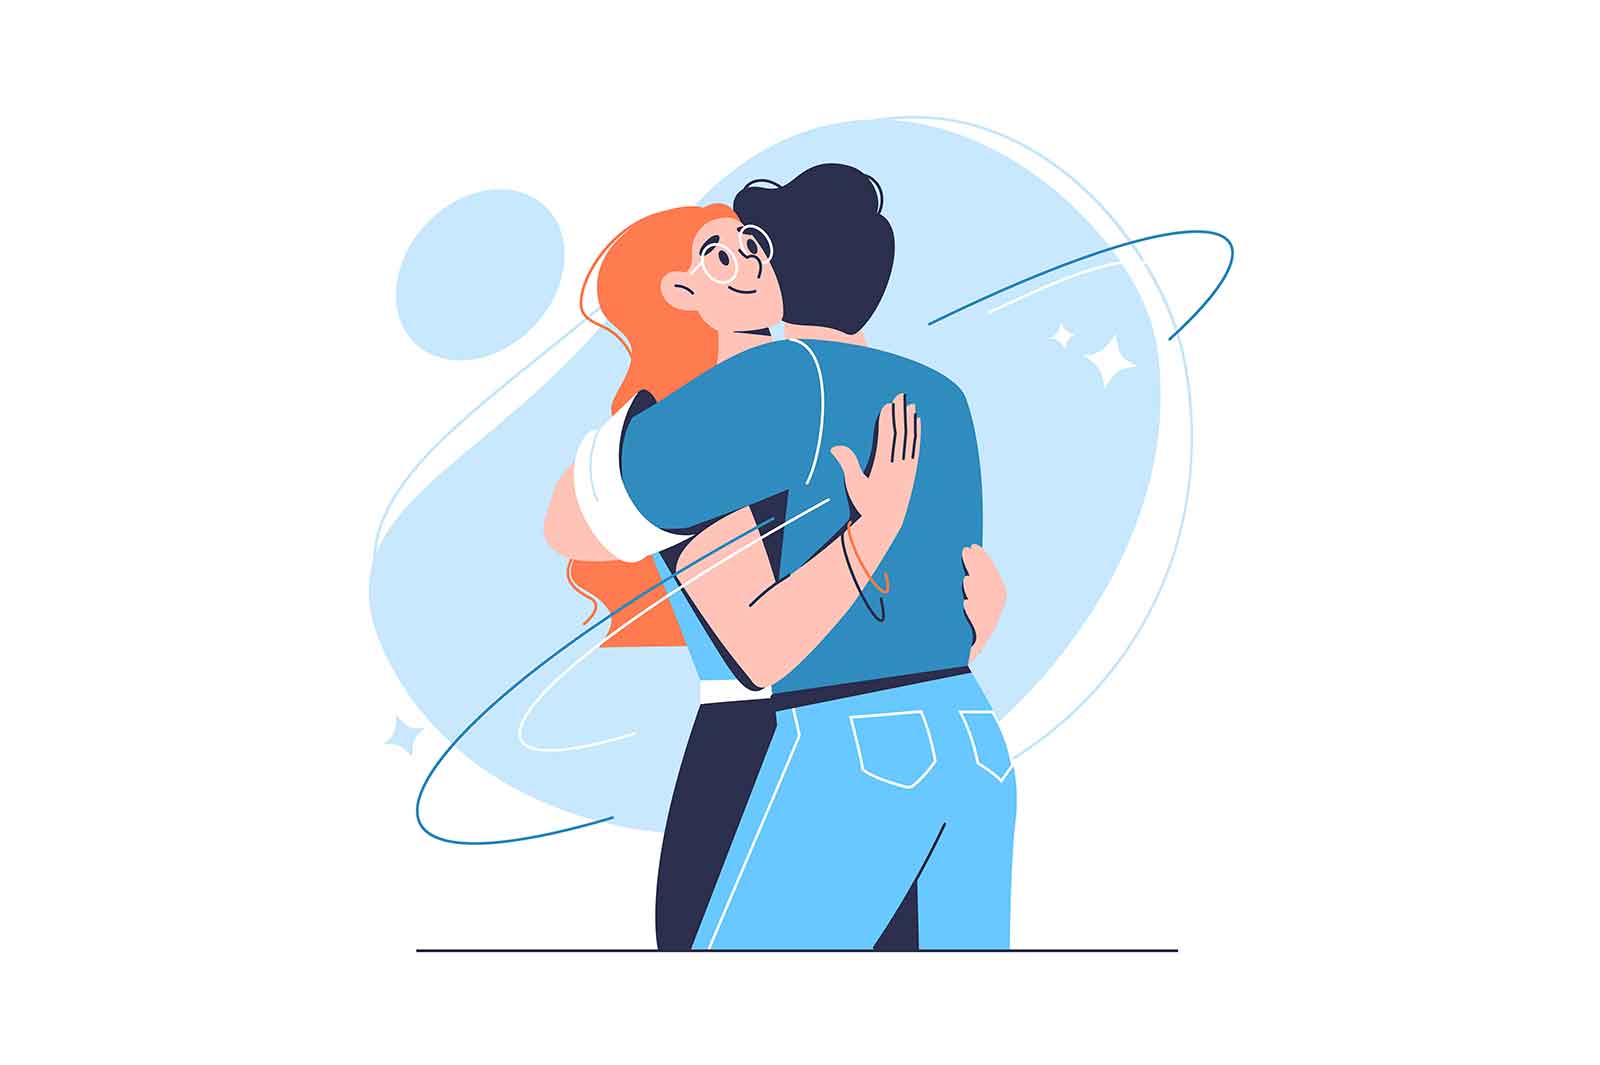 Man hugs woman, vector illustration. Close relationship concept.